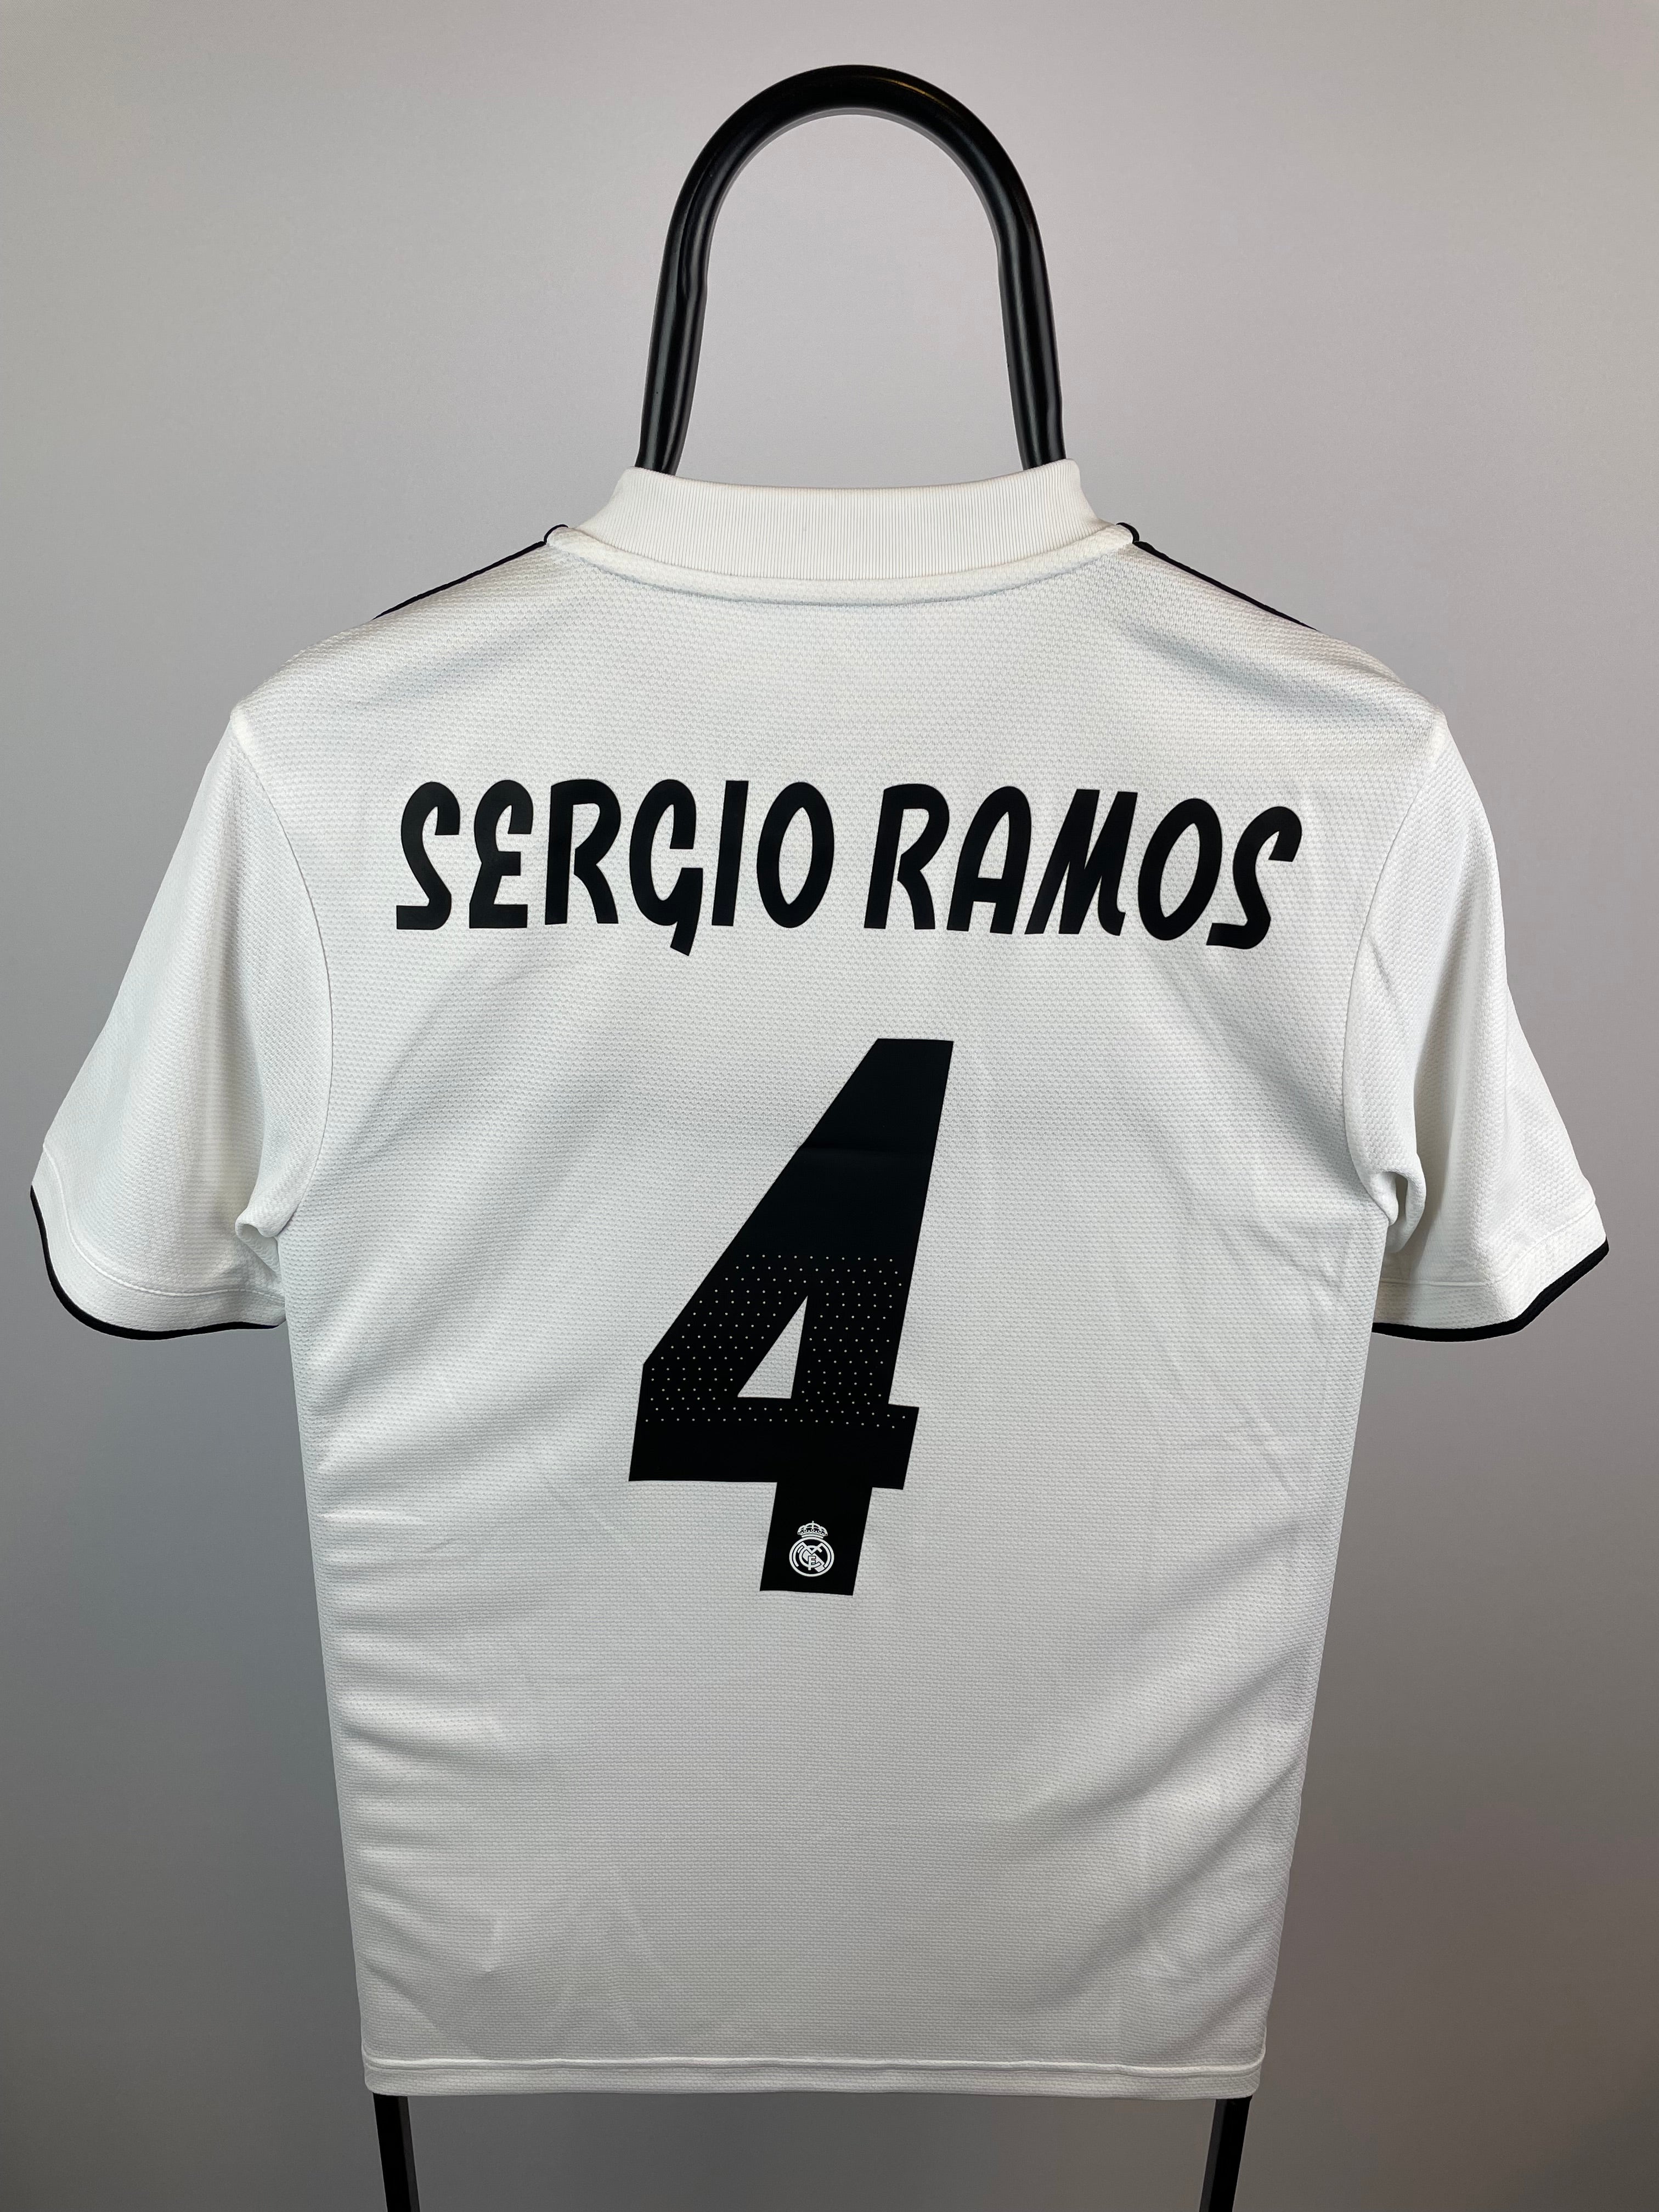 Sergio Ramos Real Madrid 18/19 hjemmebanetrøje - S